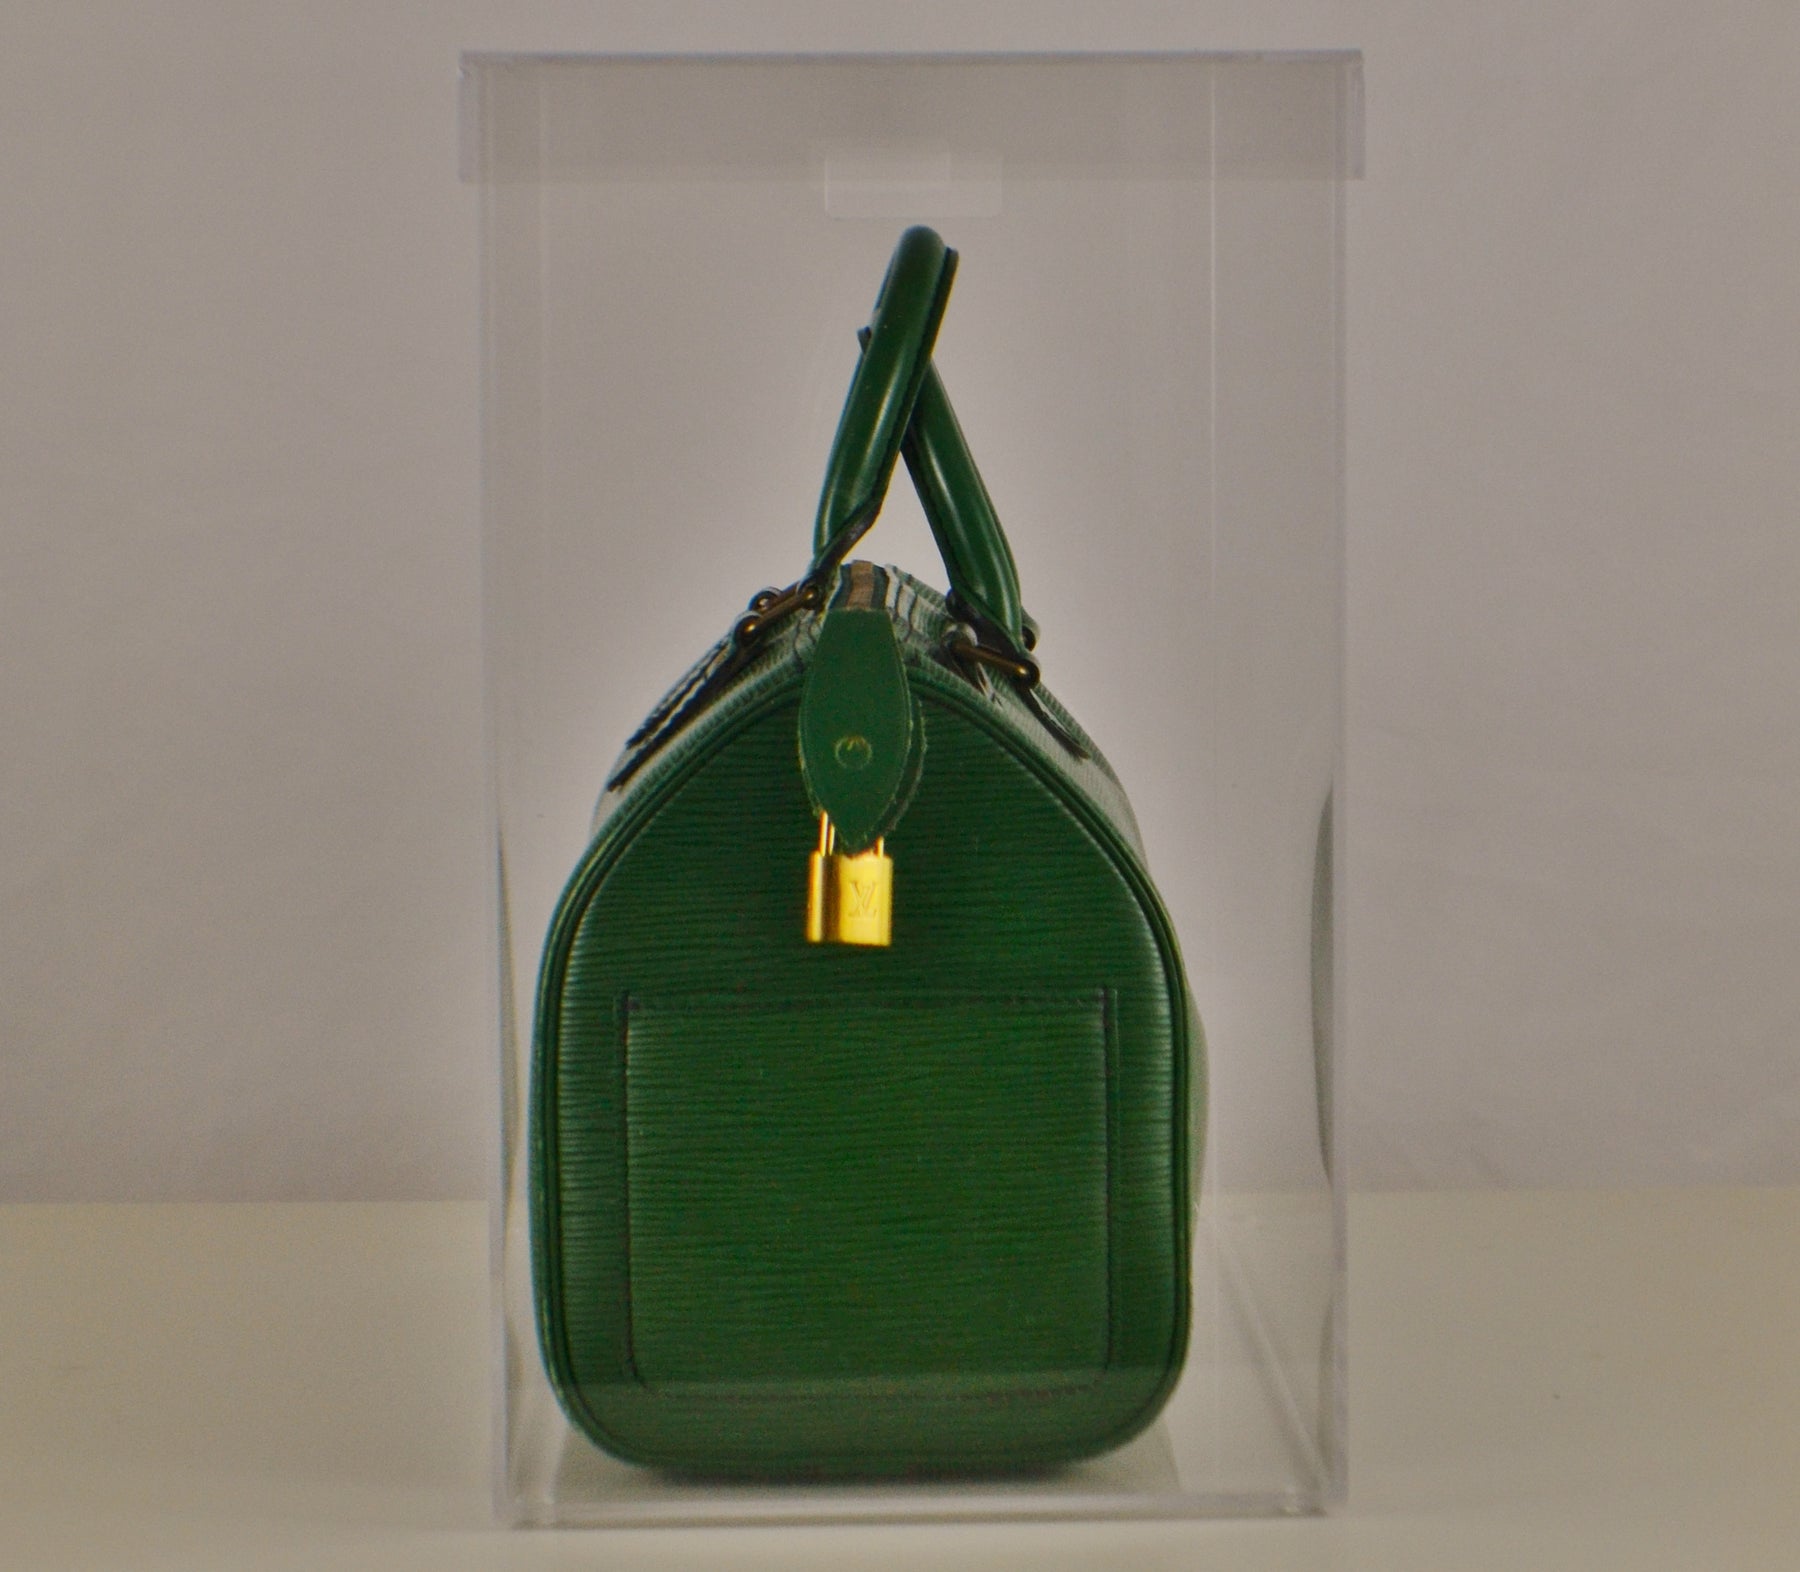 Display Case designed for Speedy 25 – Luxury Bag Display